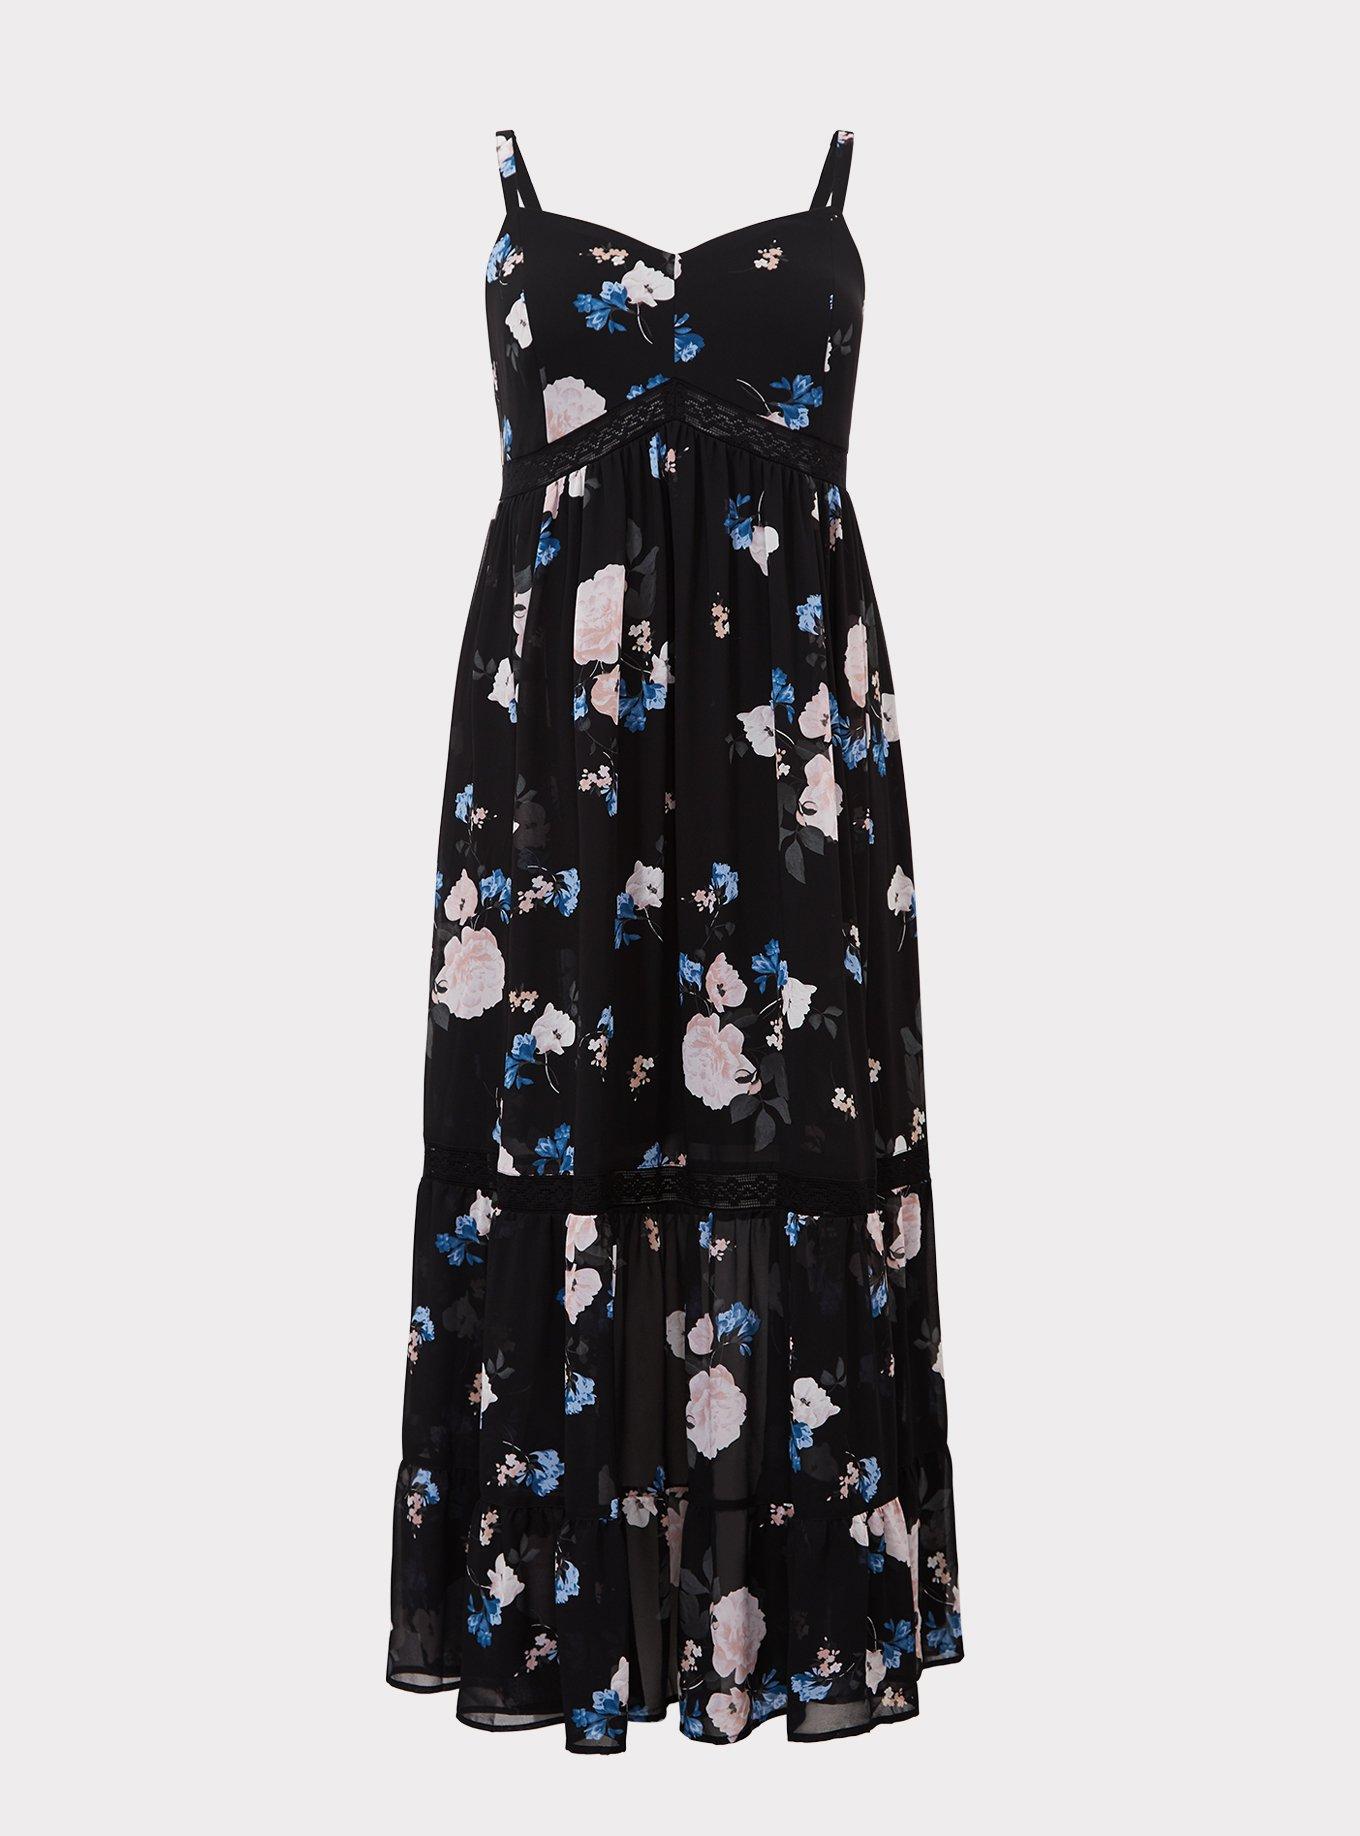 Nwt Torrid Women's Plus Size Floral Print Chiffon Midi Skirt